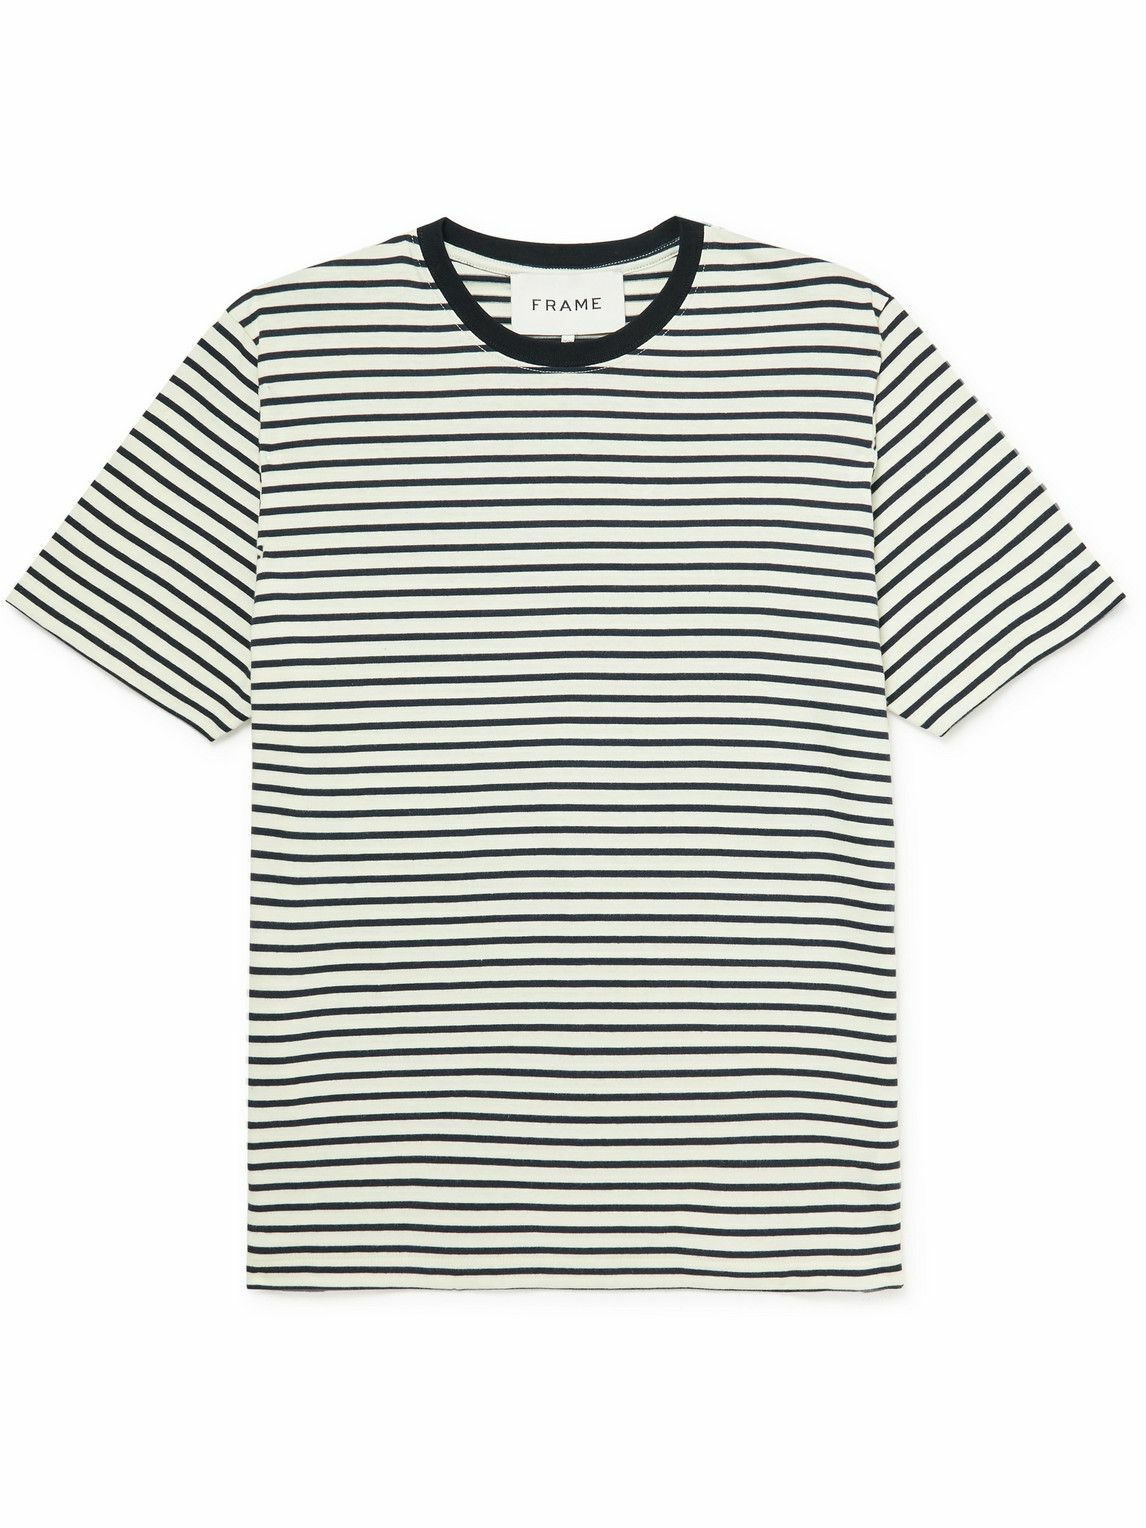 FRAME - Striped Cotton-Jersey T-Shirt - Black Frame Denim